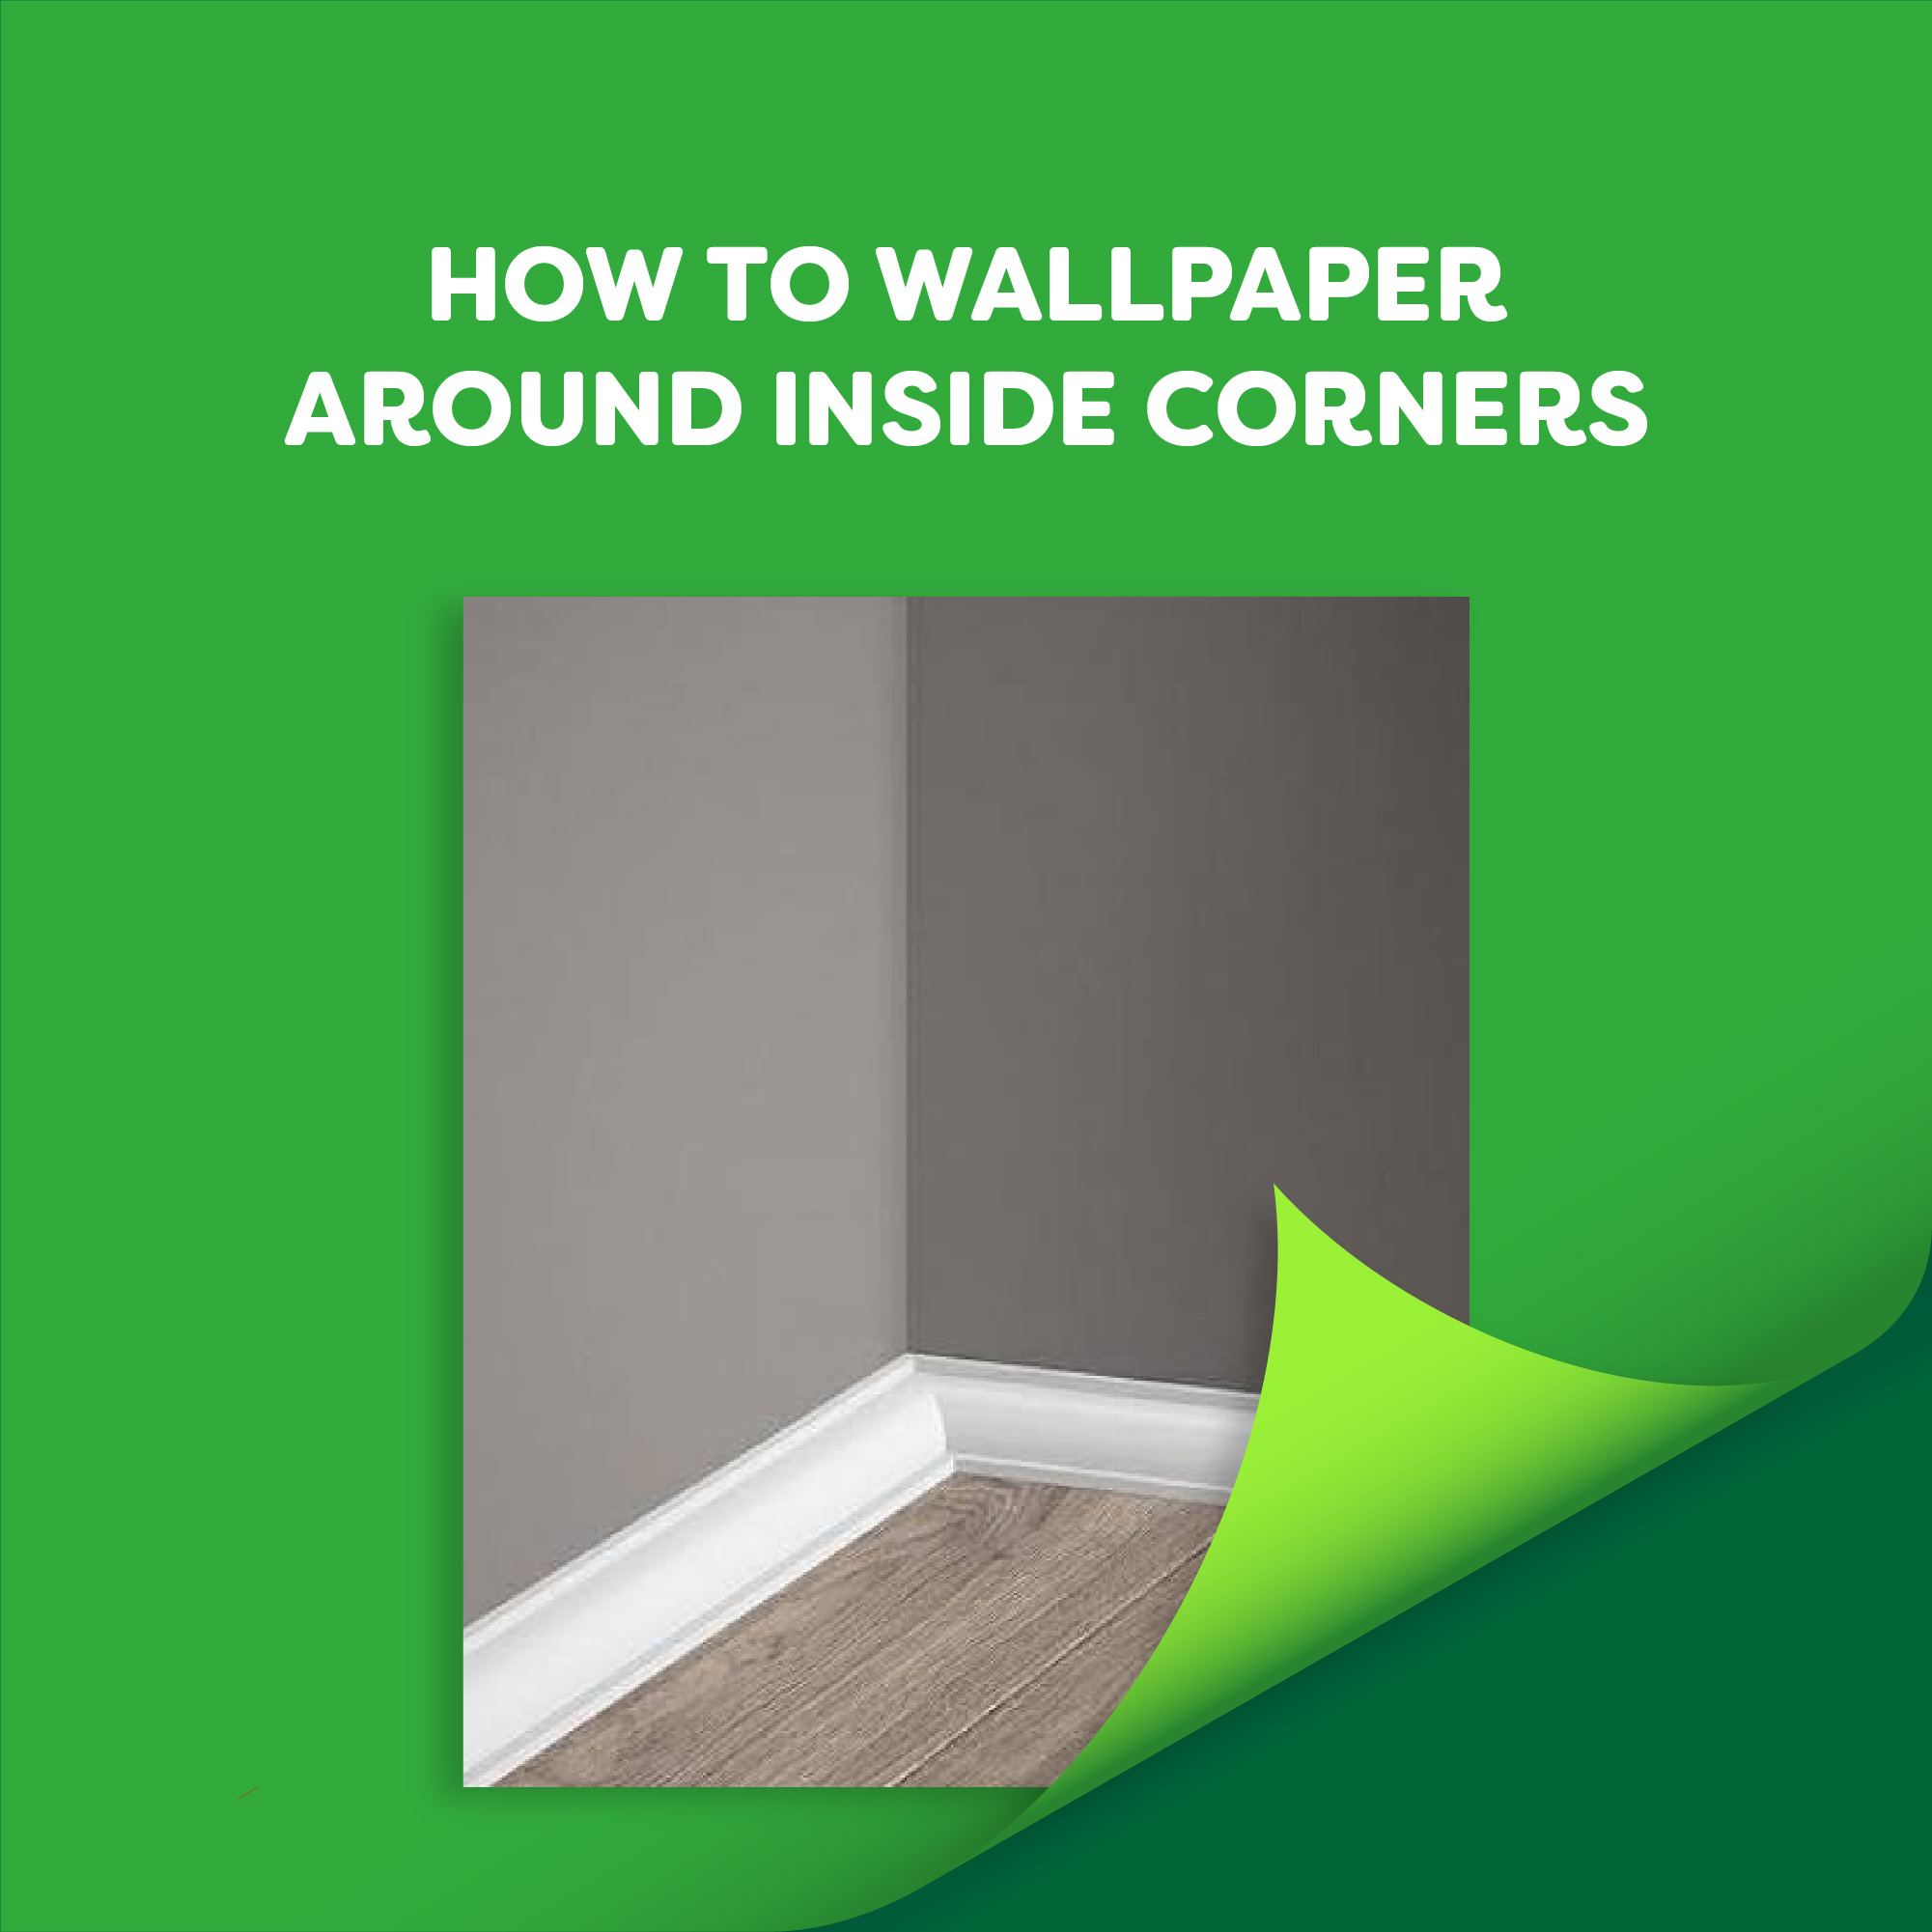 How to Wallpaper Around Inside Corners